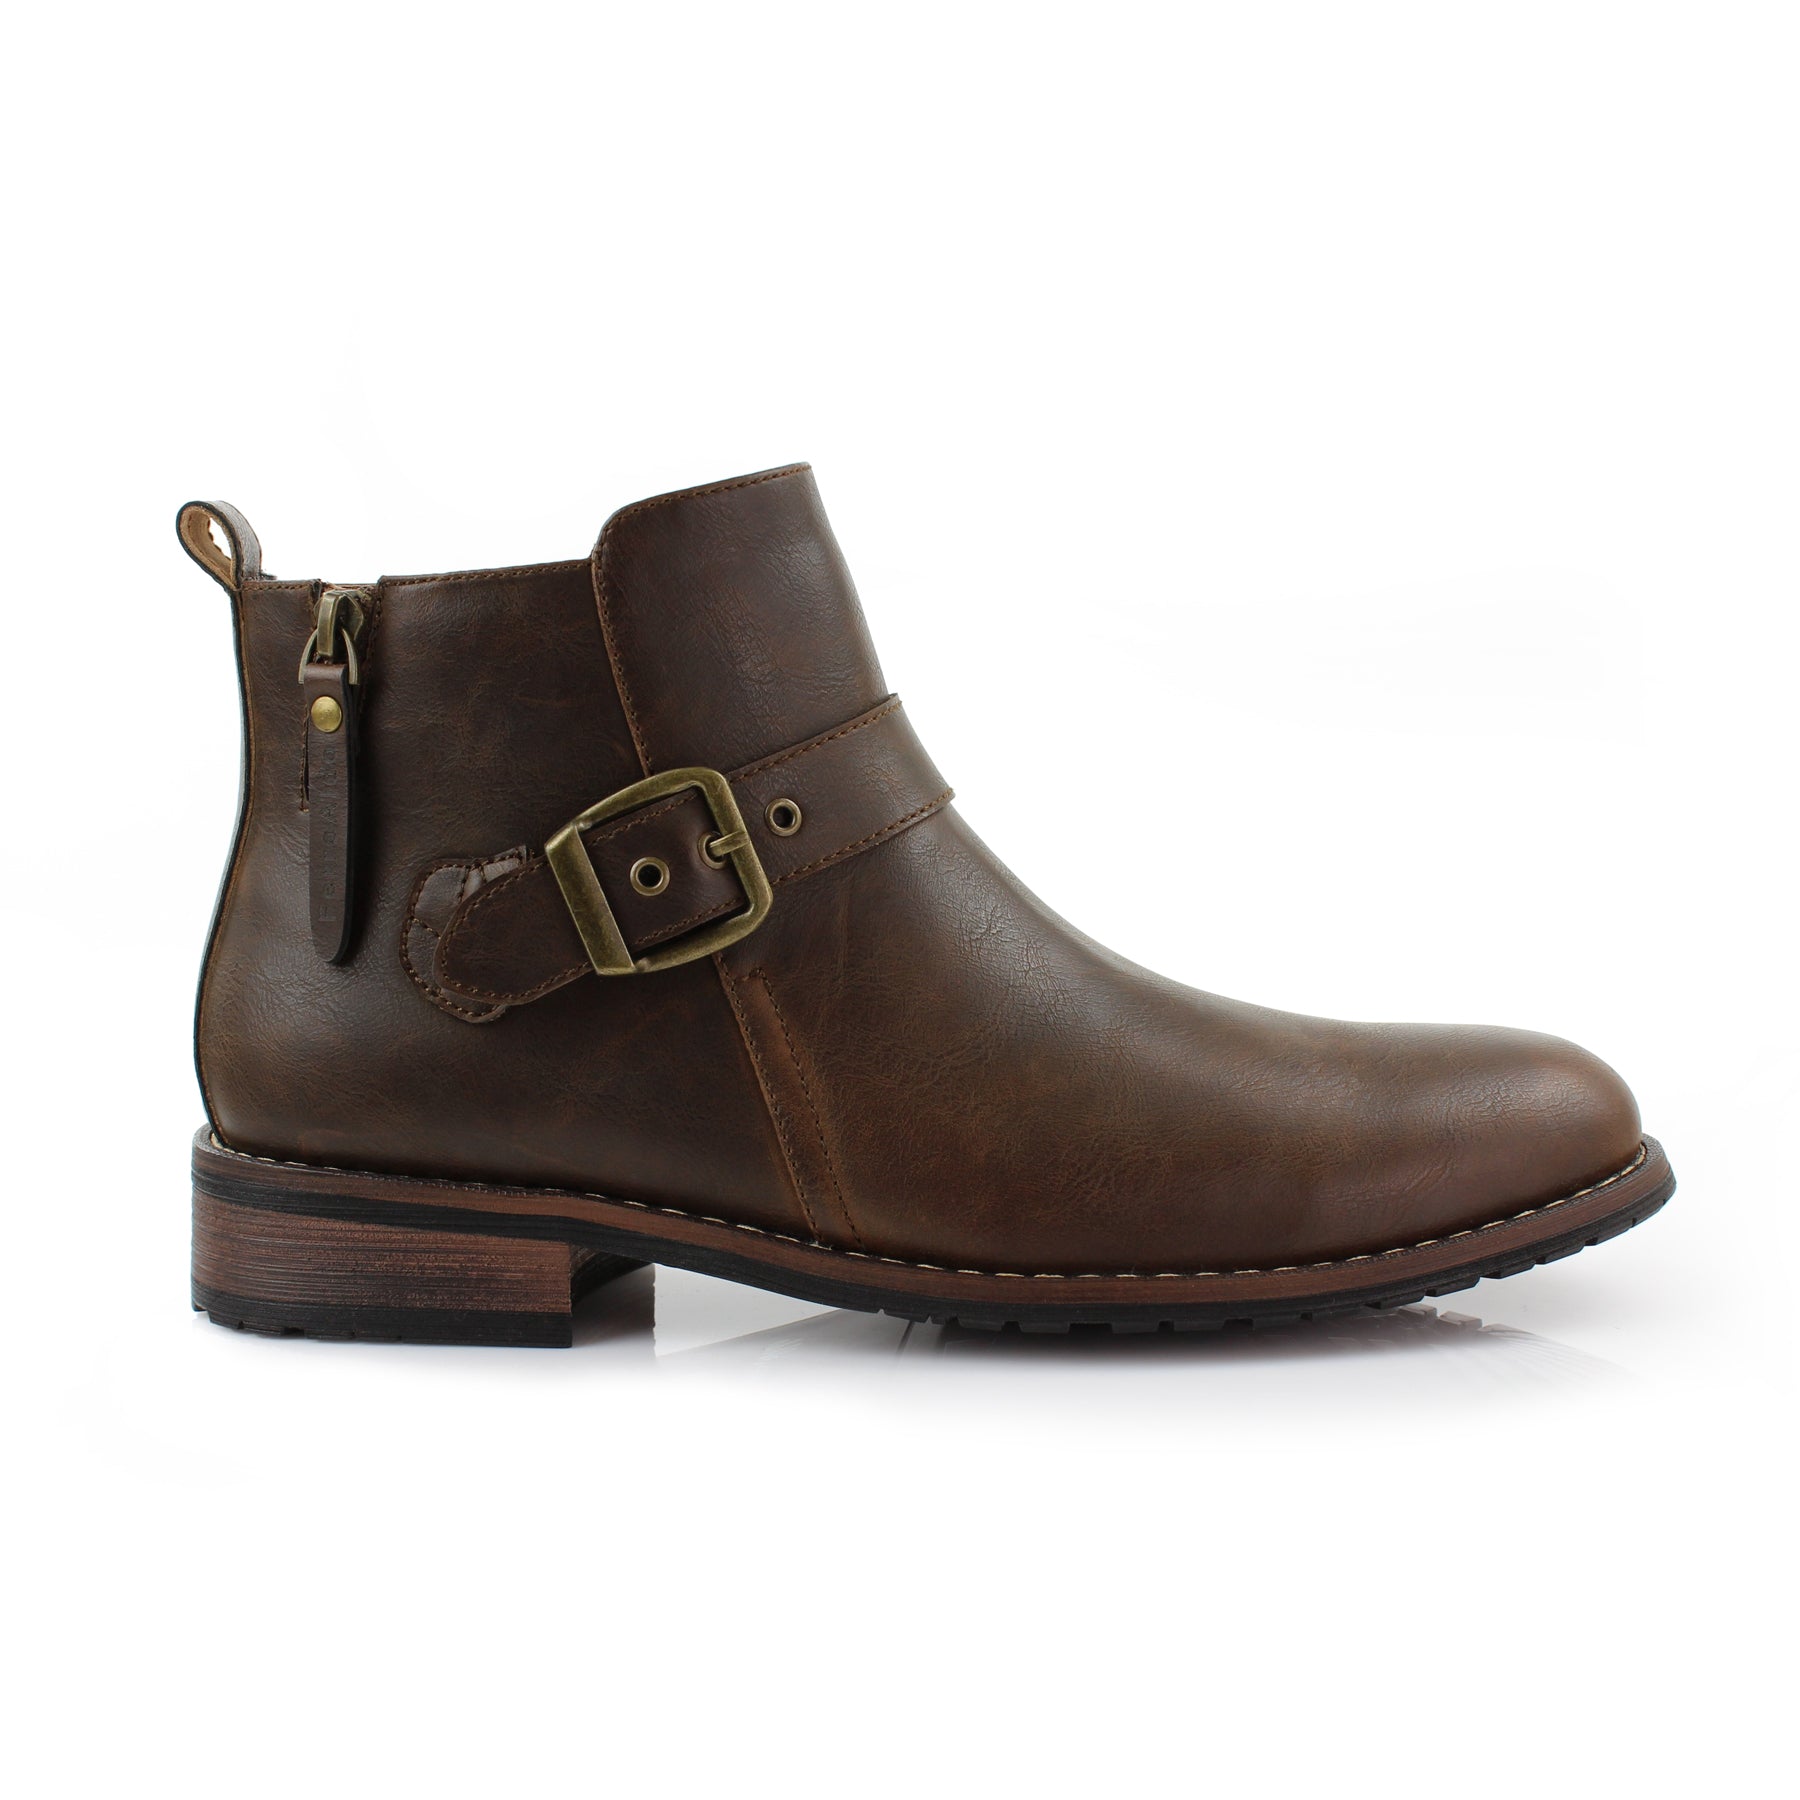 Slip-On Buckle Chelsea Boots | Dalton by Ferro Aldo | Conal Footwear | Outer Side Angle View